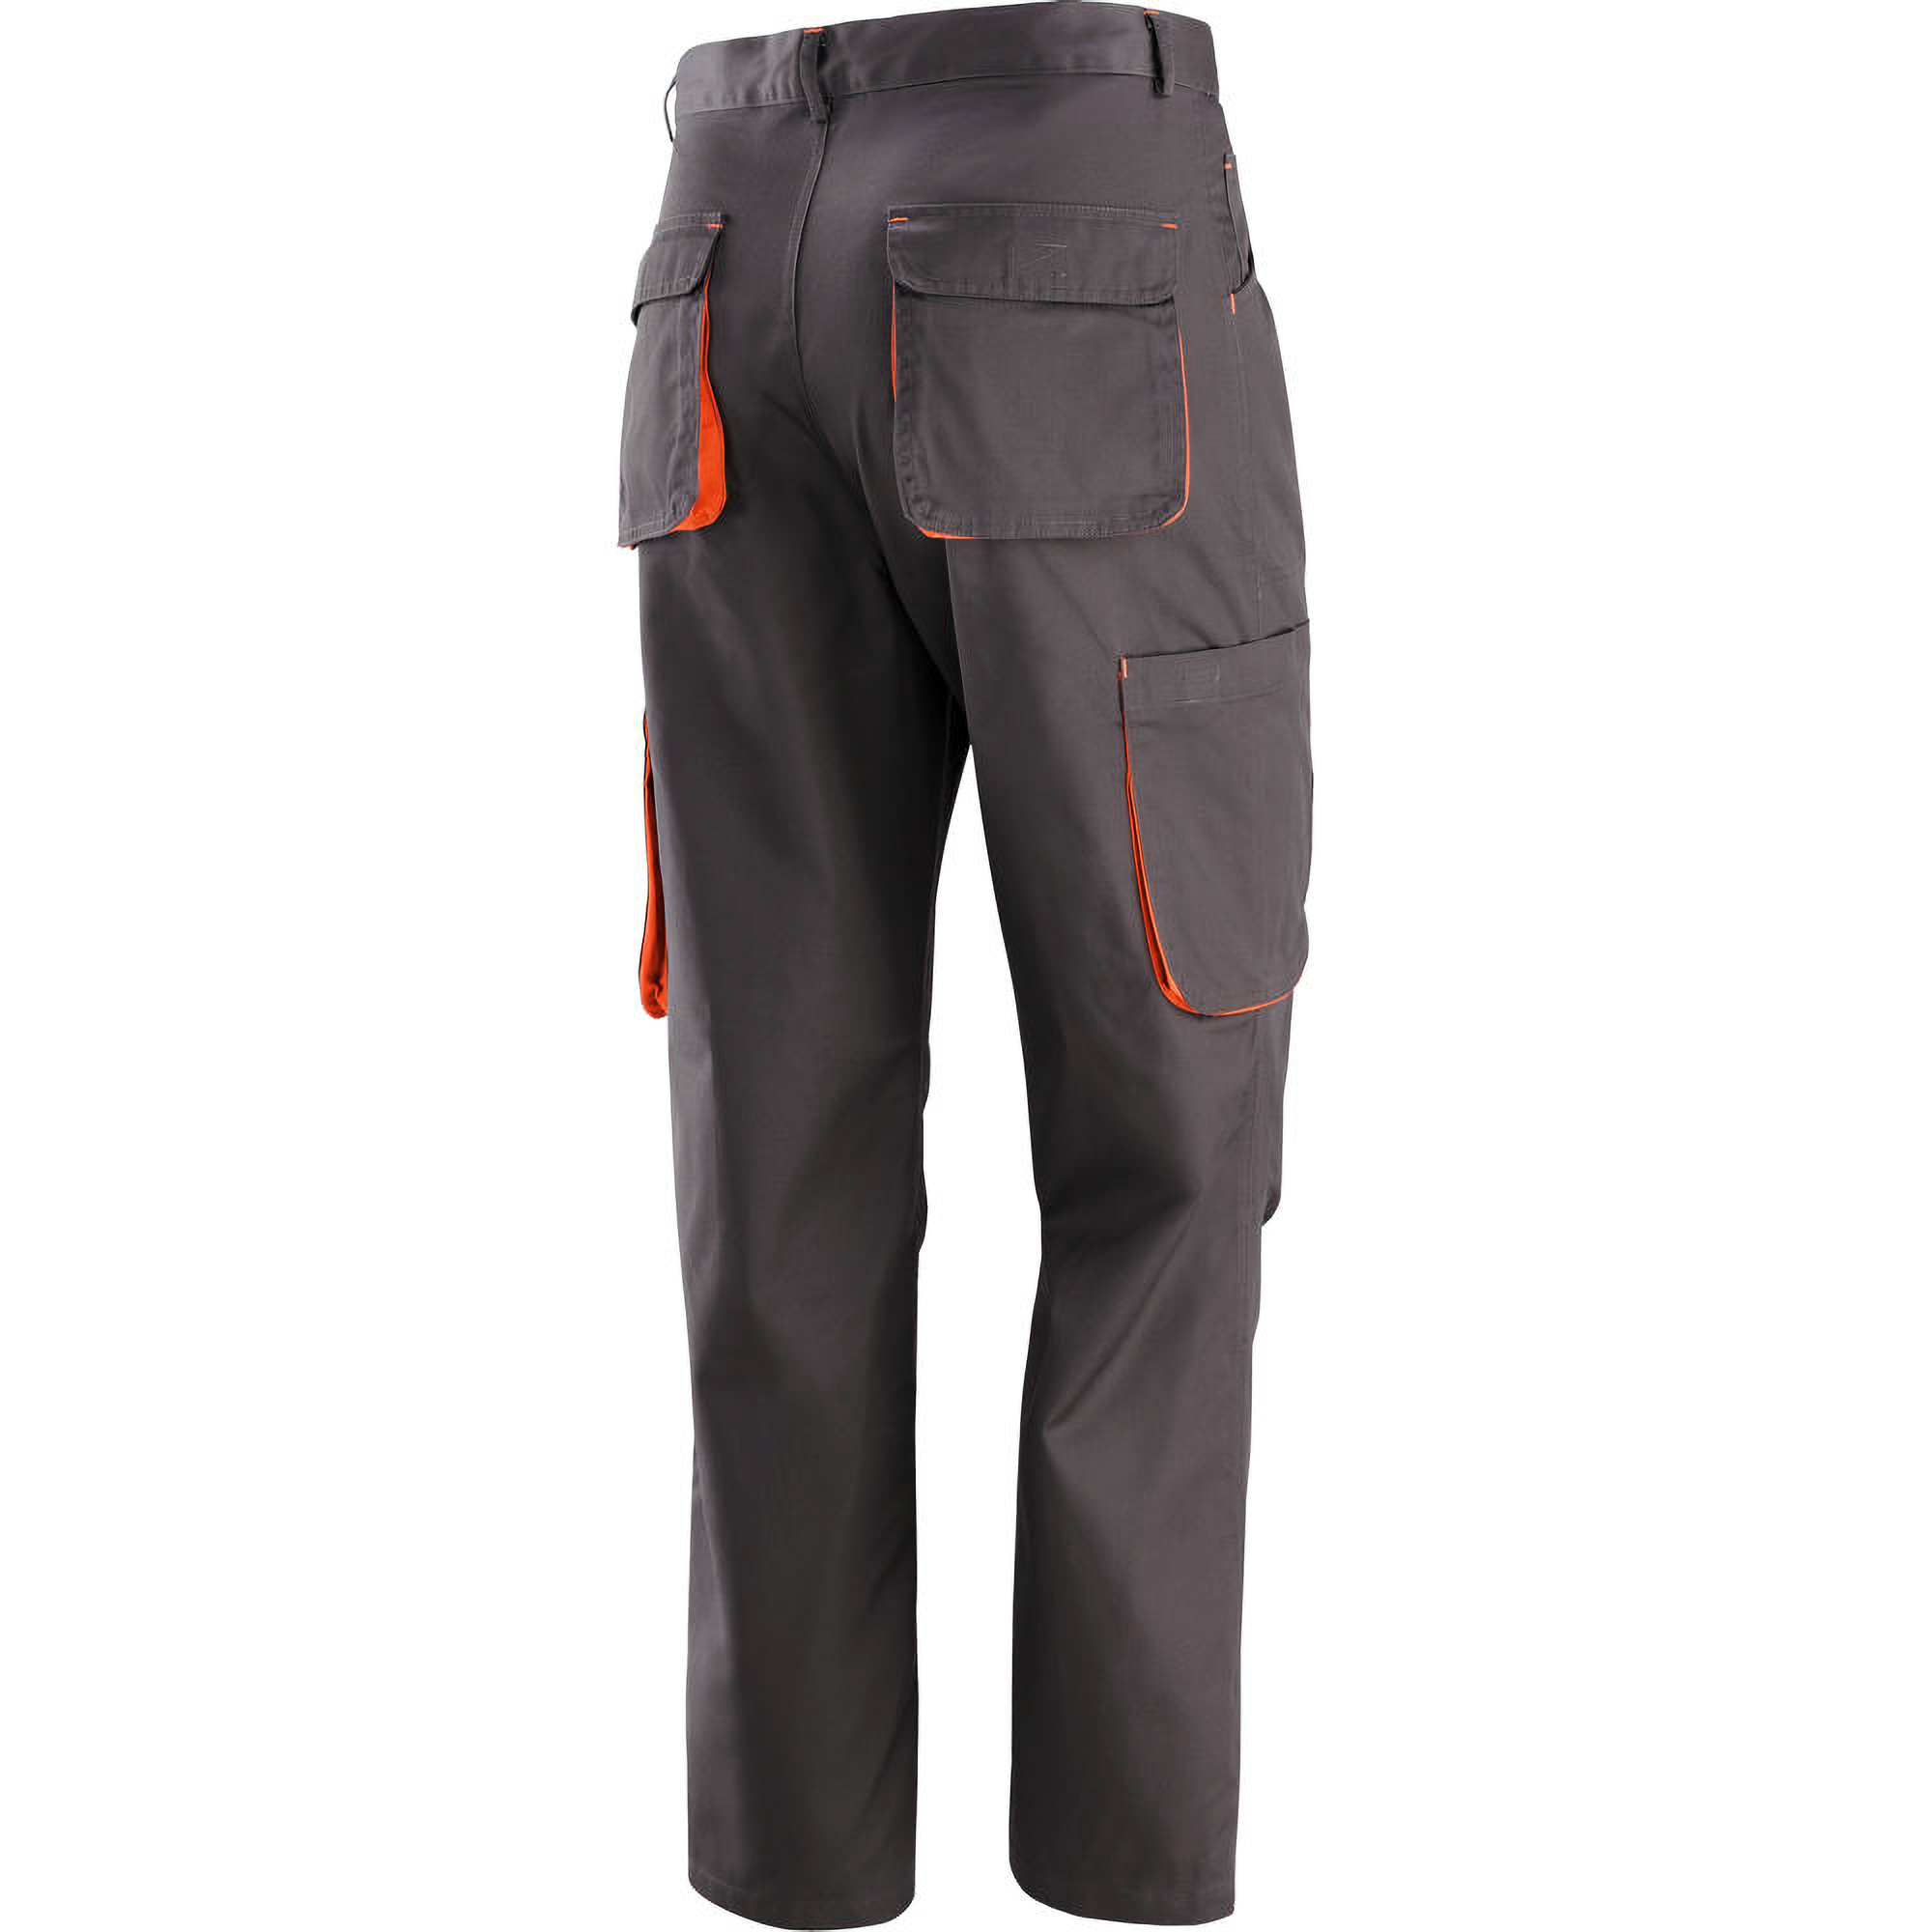 Pantaloni Neri Spa Willis 437085, comfort sul lavoro